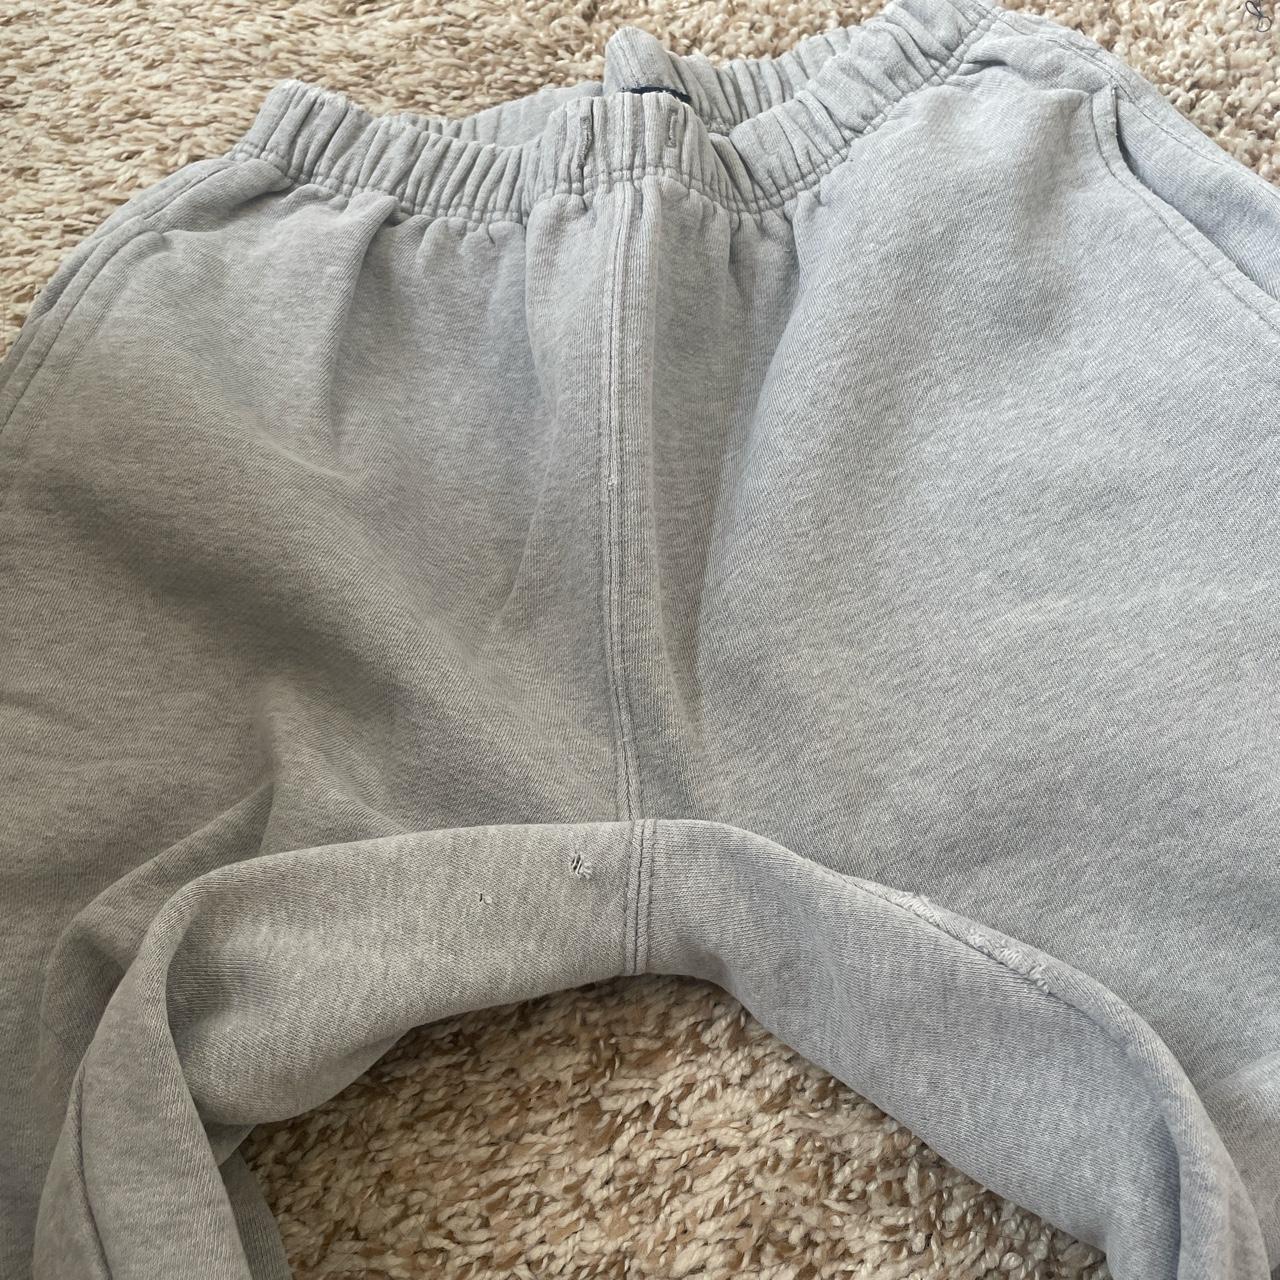 Patched Grey Sweatpants – SuperLoveTees